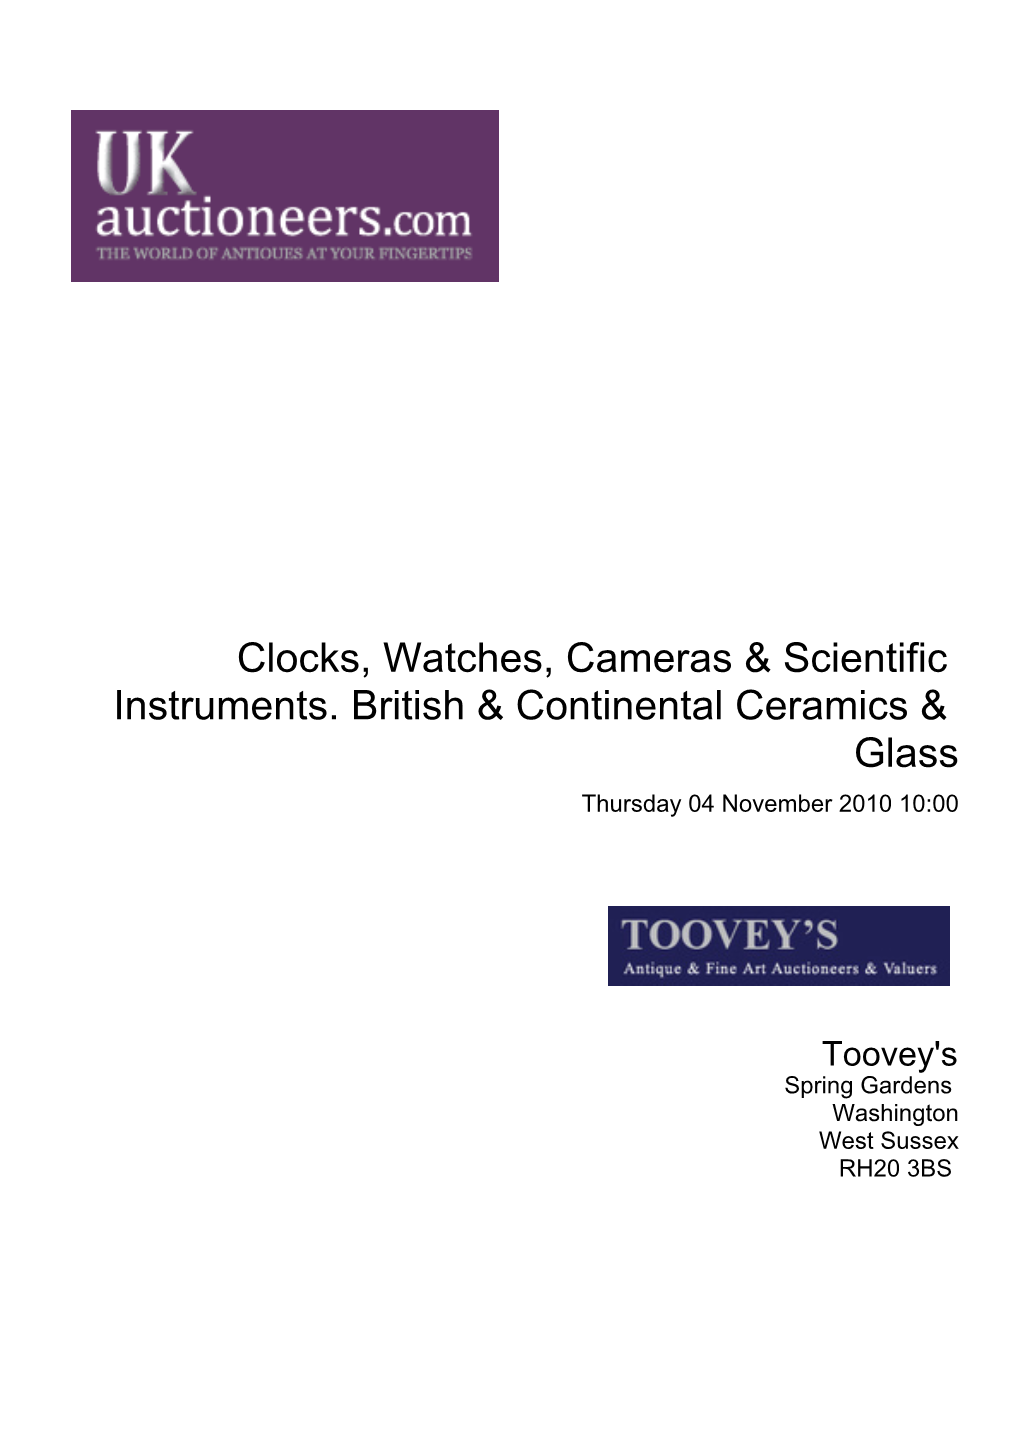 Clocks, Watches, Cameras & Scientific Instruments. British & Continental Ceramics & Glass